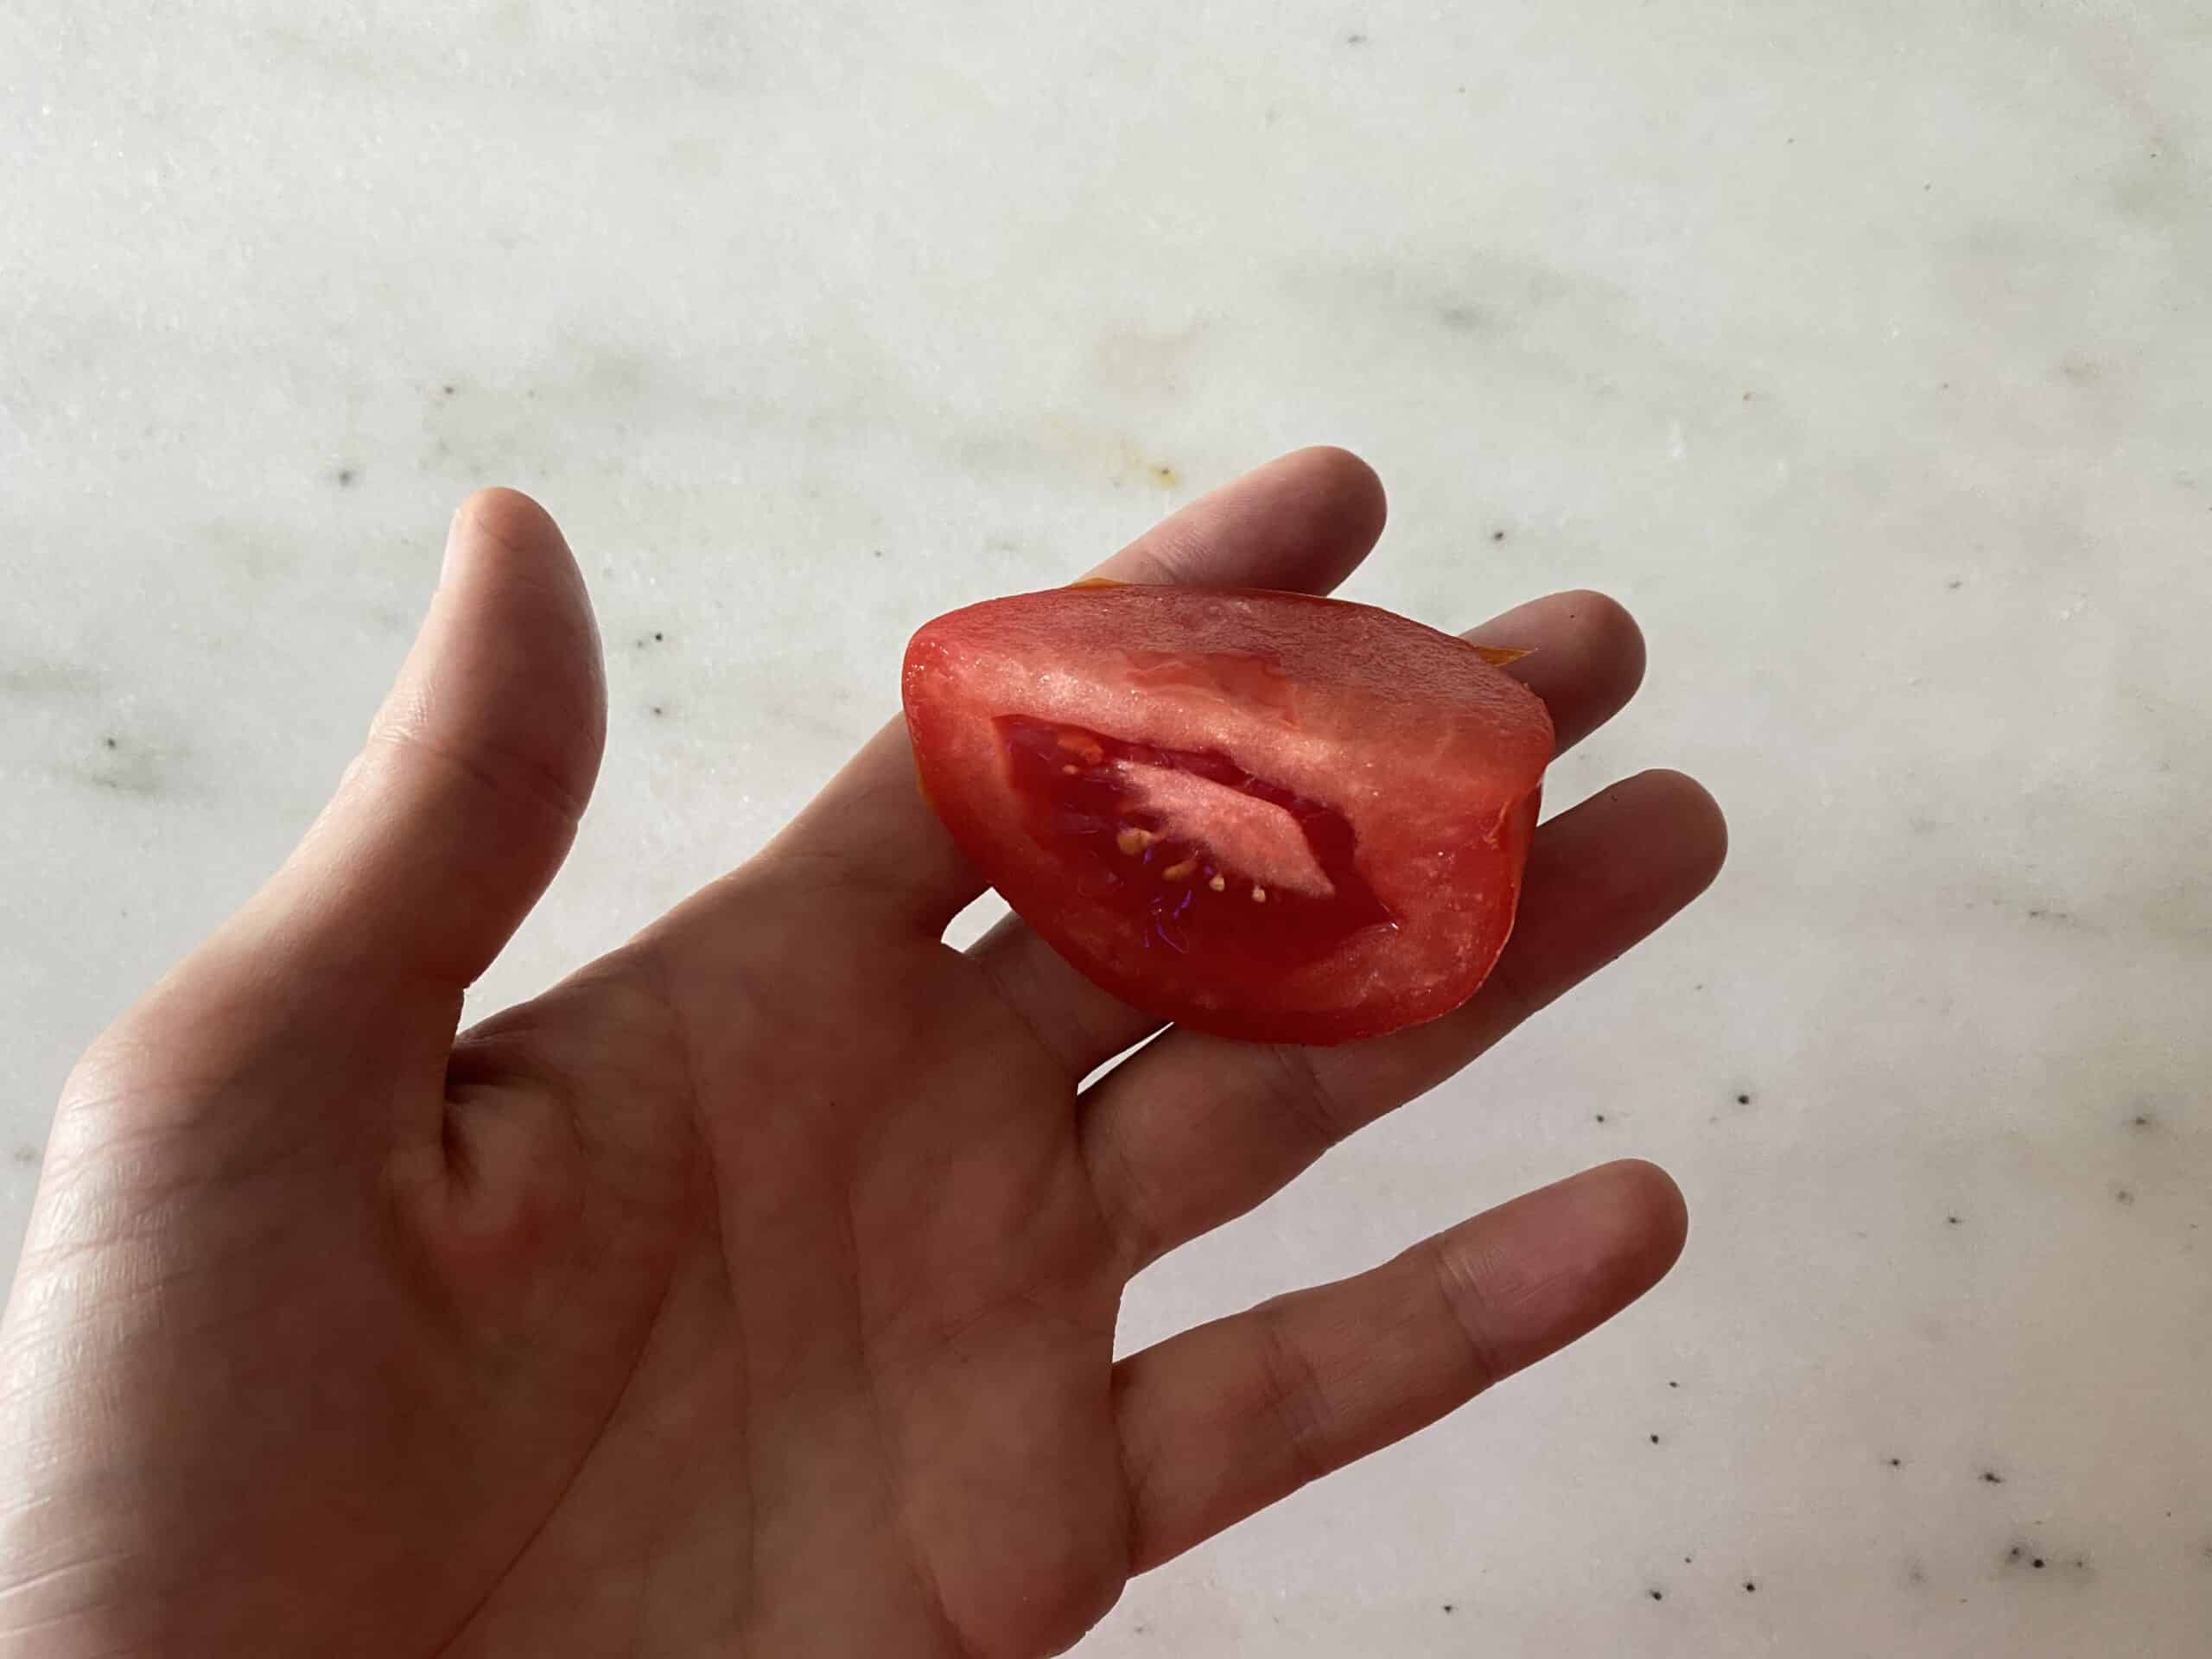 hand holding one tomato wedge